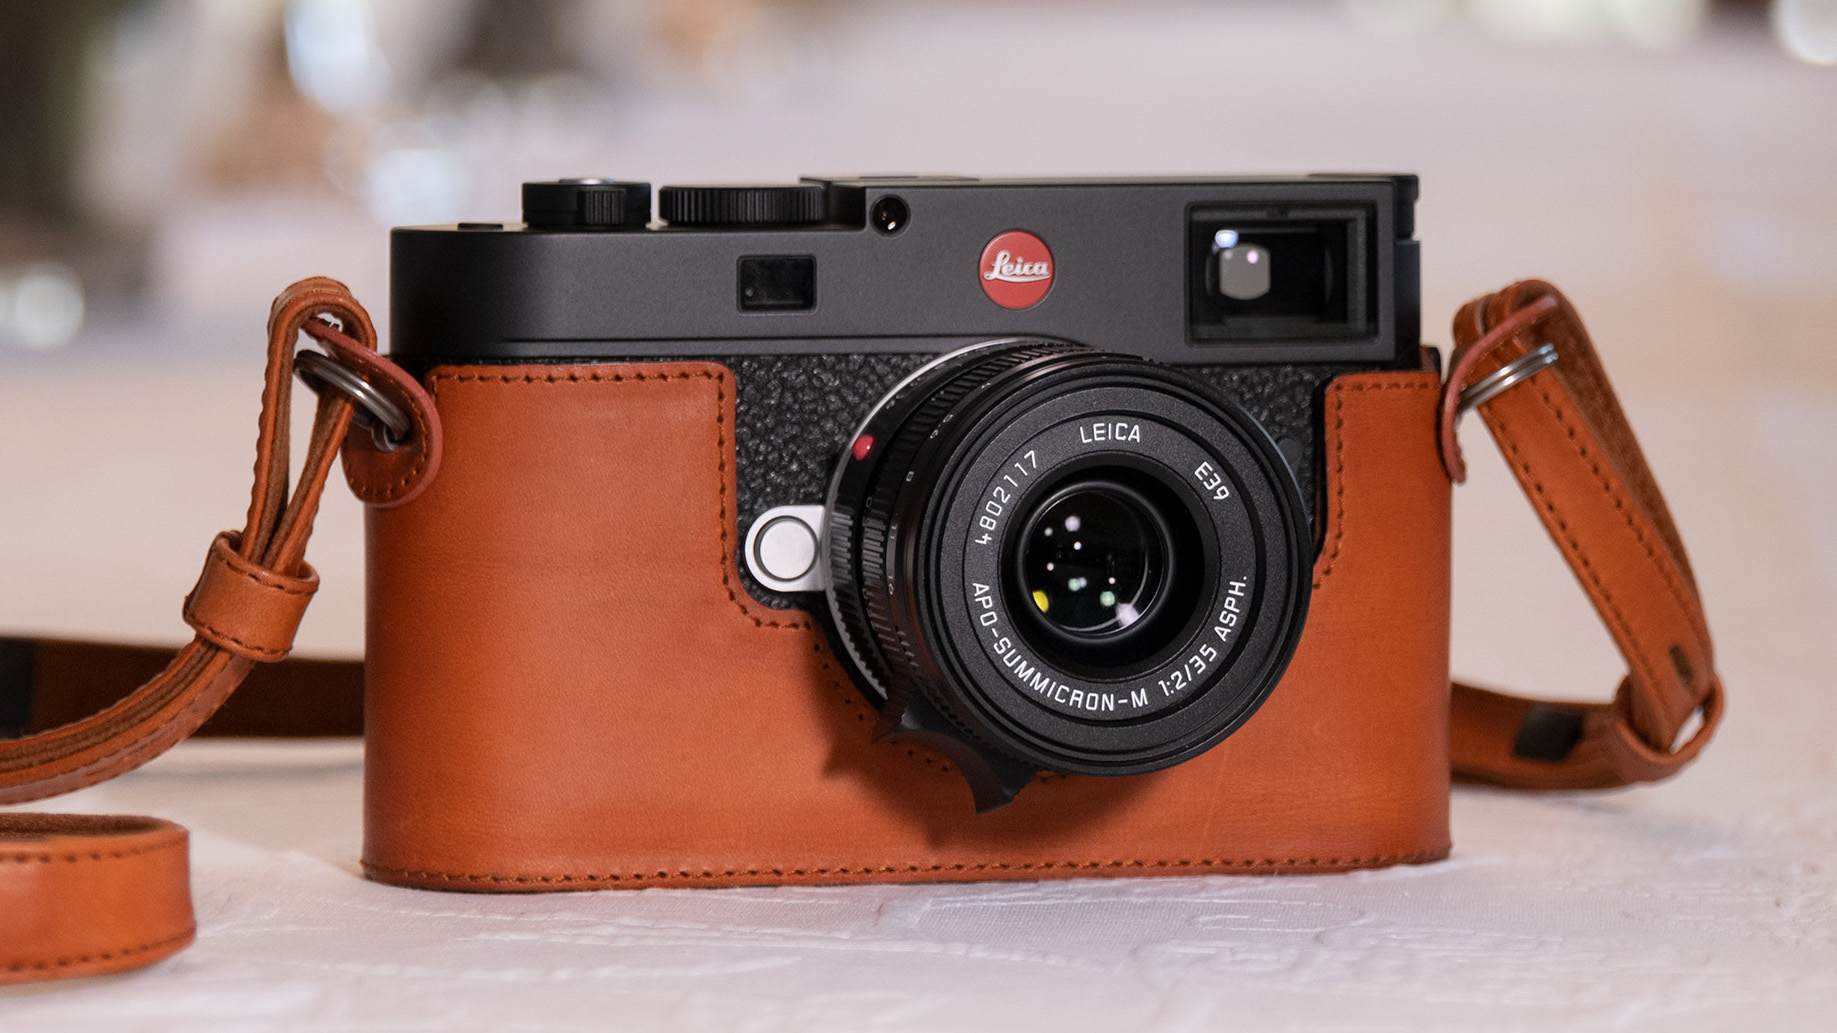 Are Leica cameras worth their price tags?